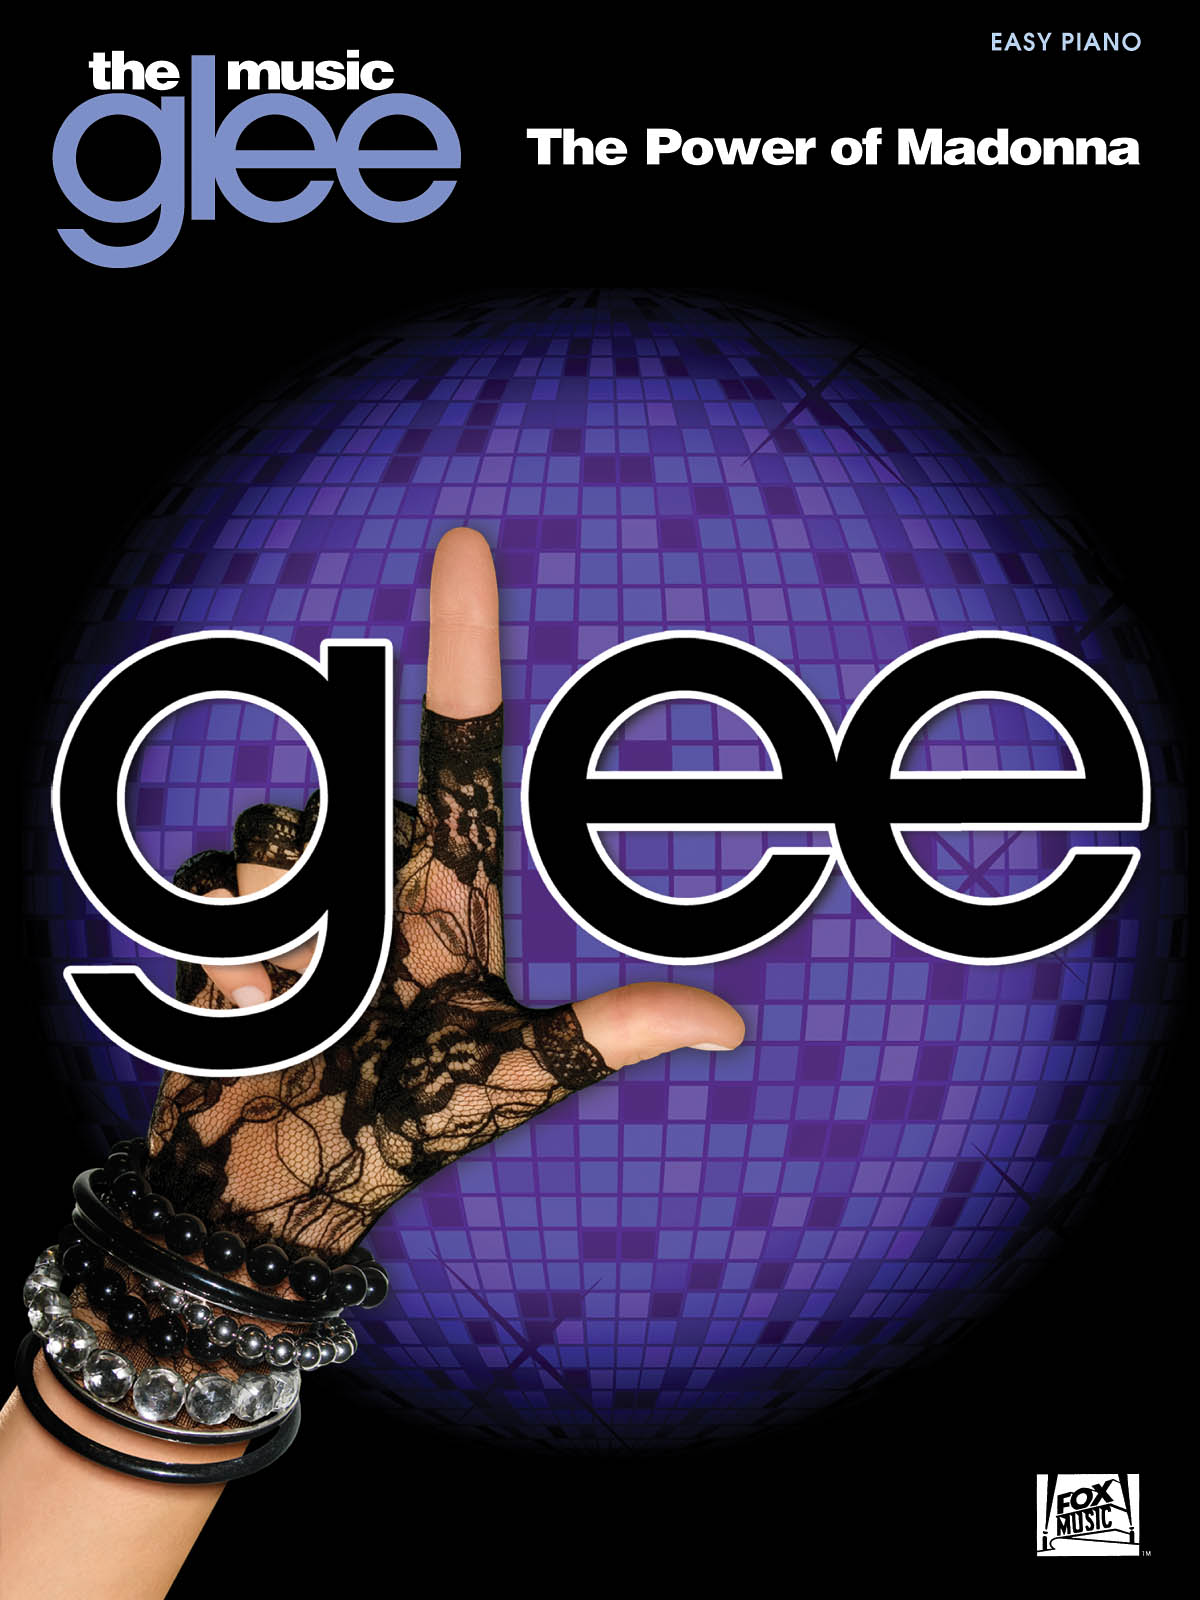 Buy Glee Cast Sheet music, Tablature books, scores